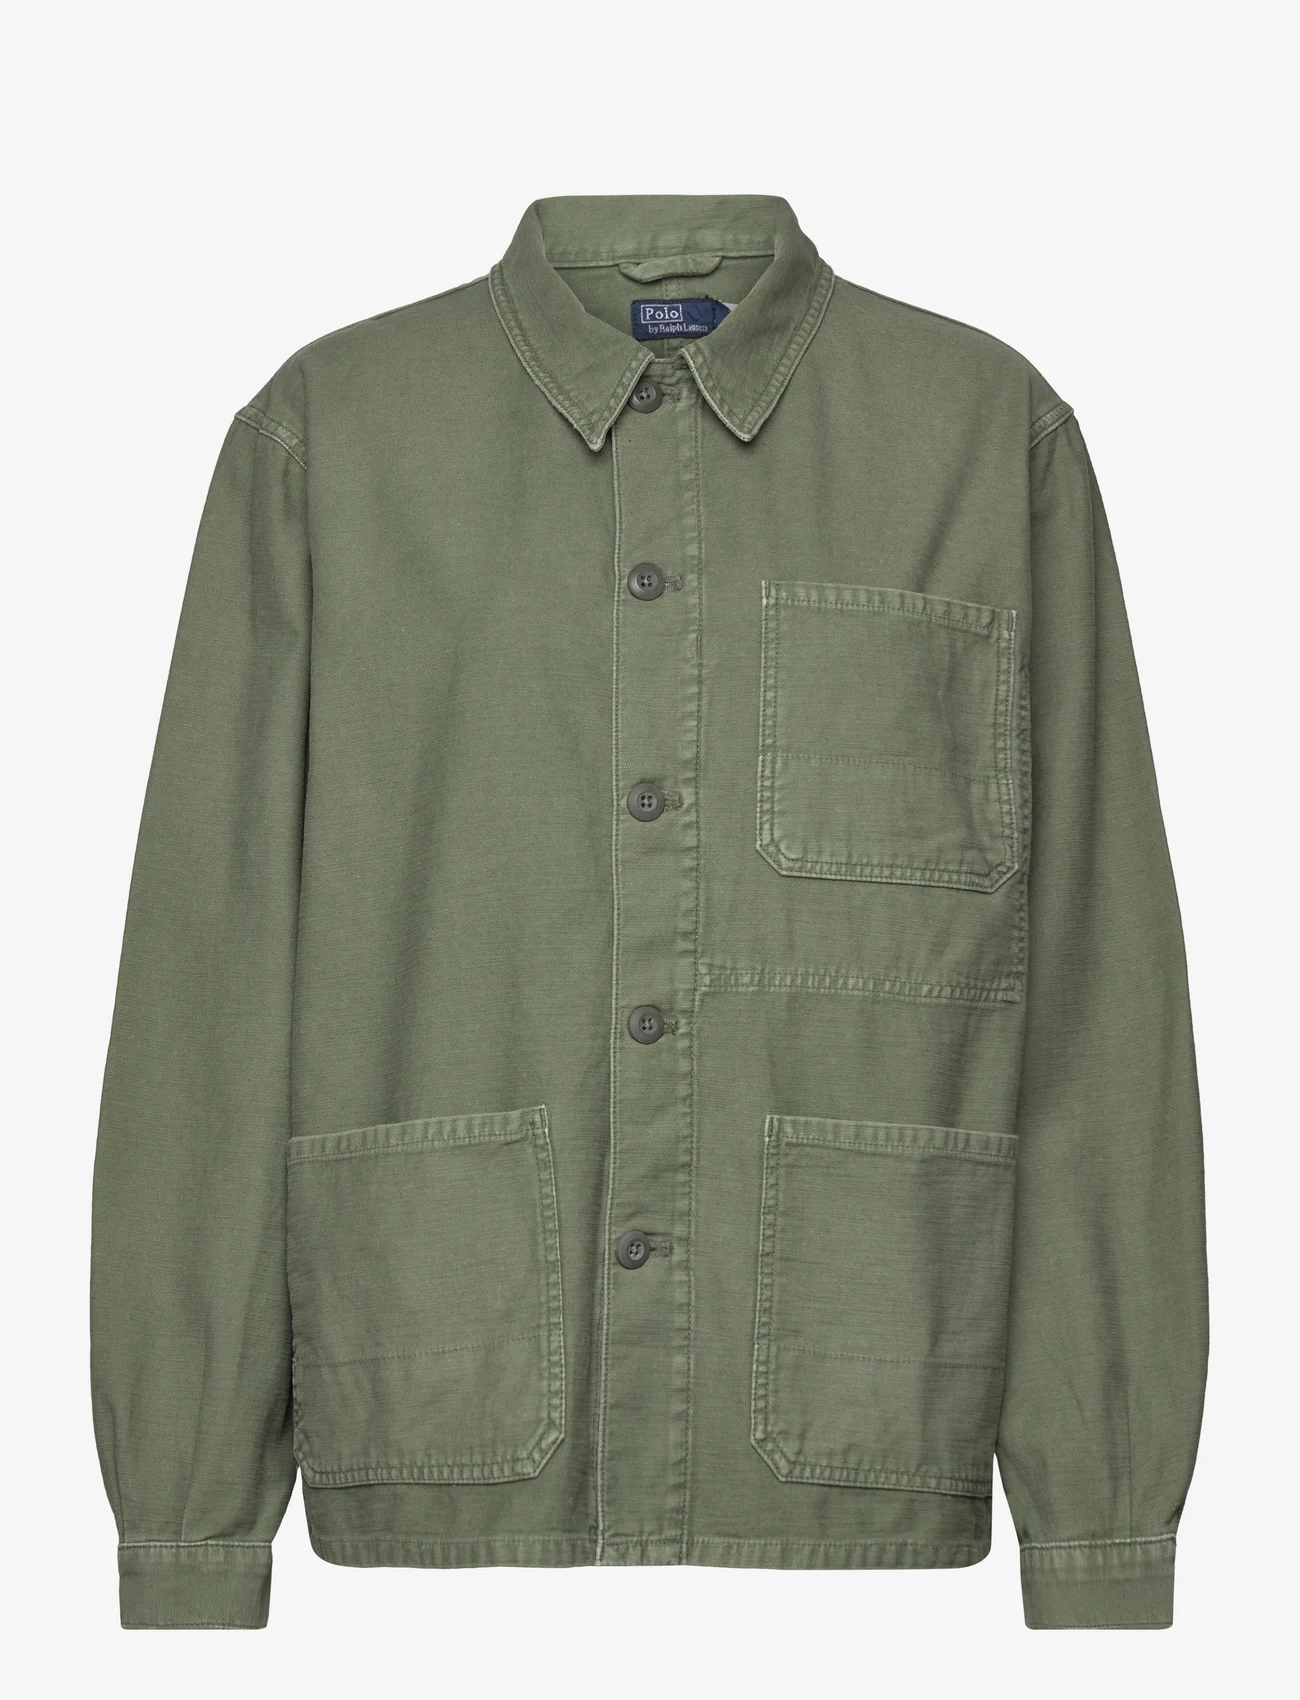 Polo Ralph Lauren - Cotton Chore Jacket - overshirts - olive - 0